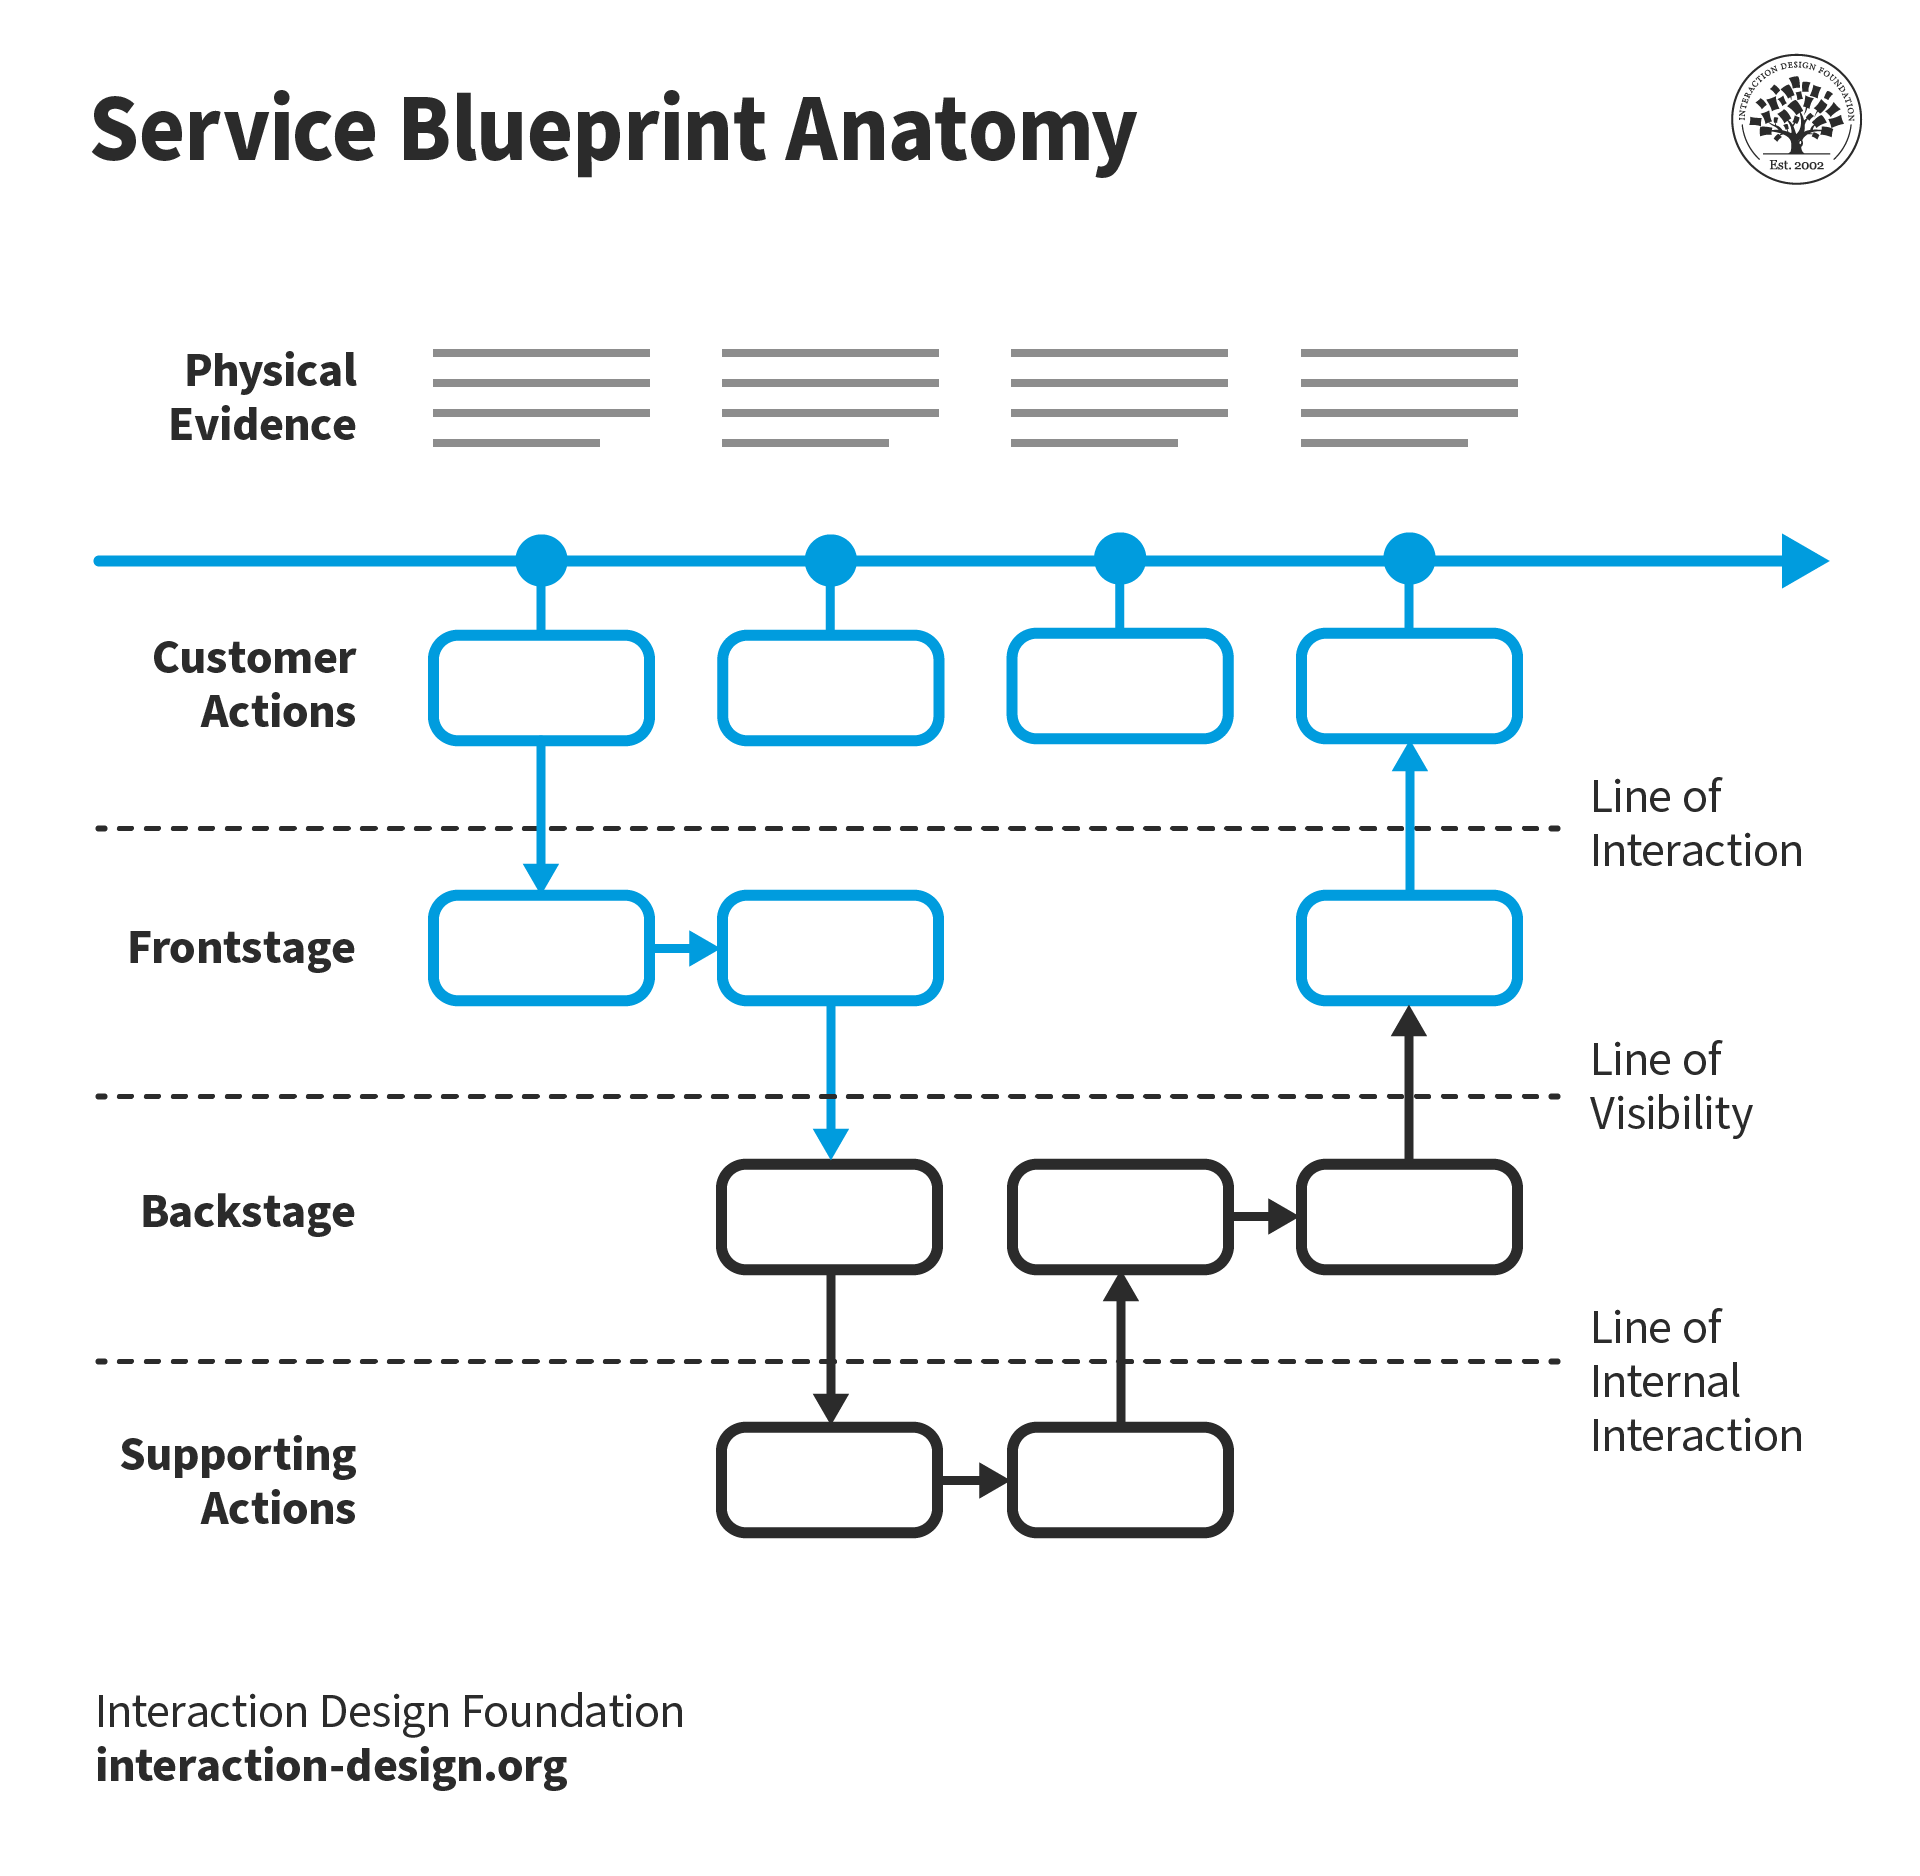 Service Blueprint Anatomy